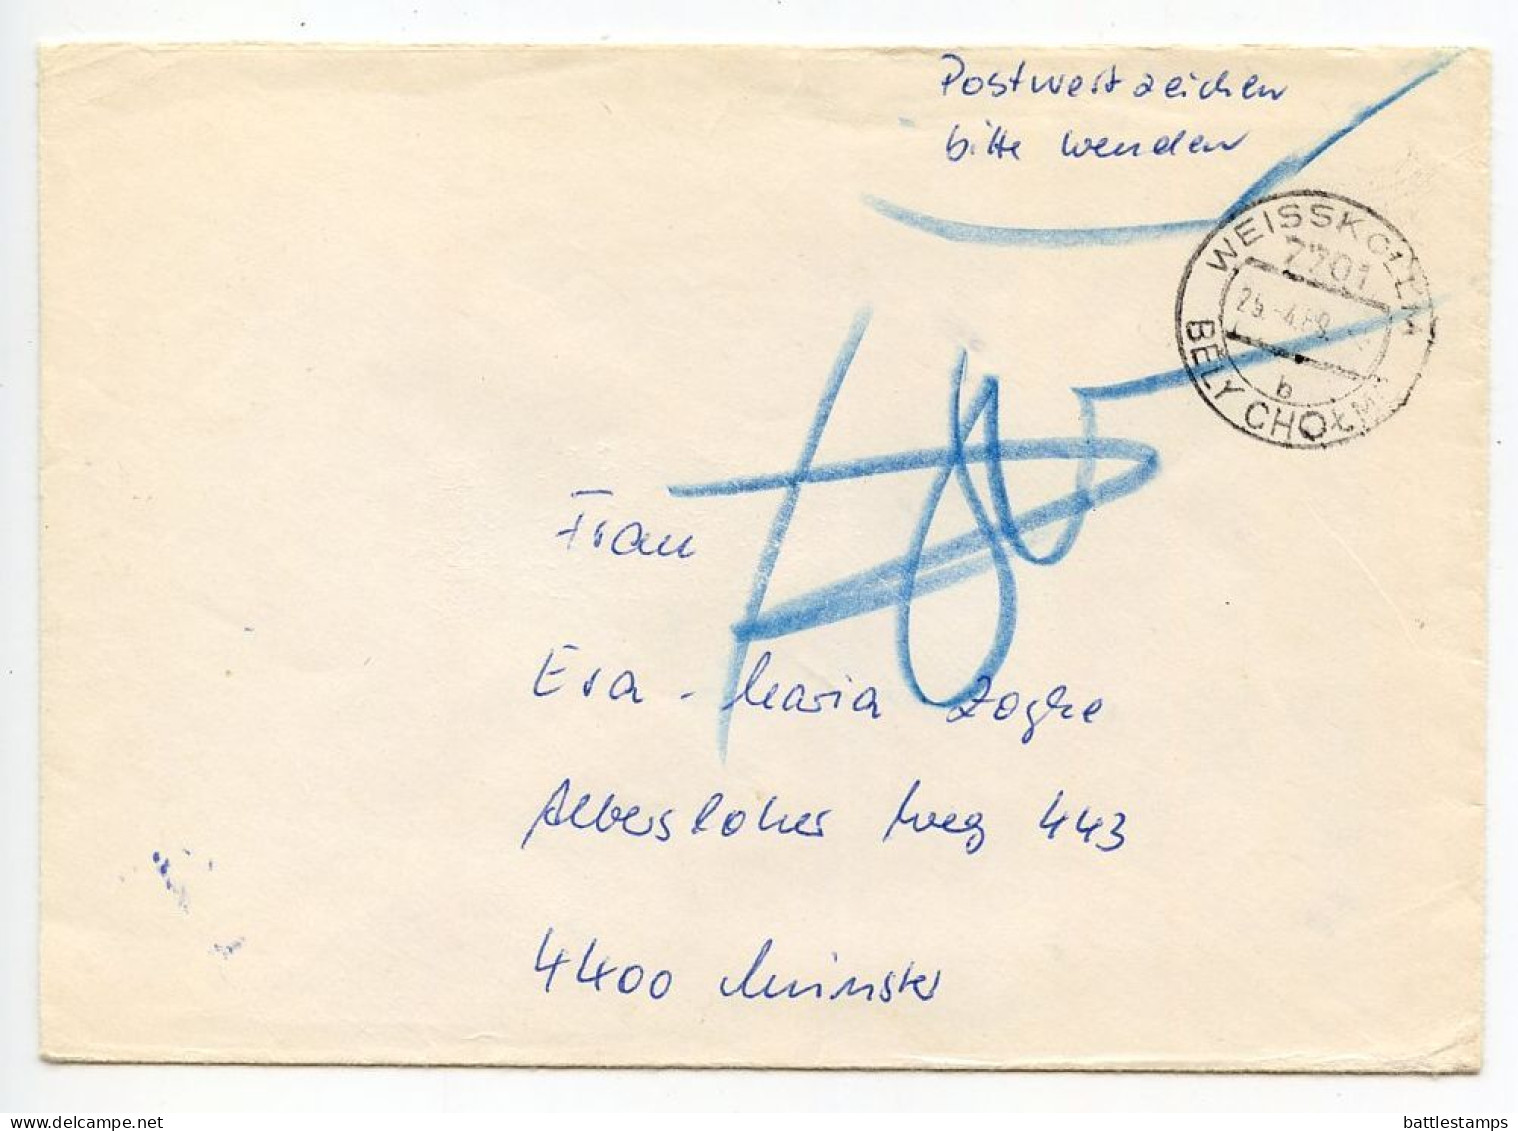 Germany, East 1989 Cover; Weisskollm / Běły Chołmc Postmarks; 11.10m Thomas Munzter Souvenir Sheet - Lettres & Documents